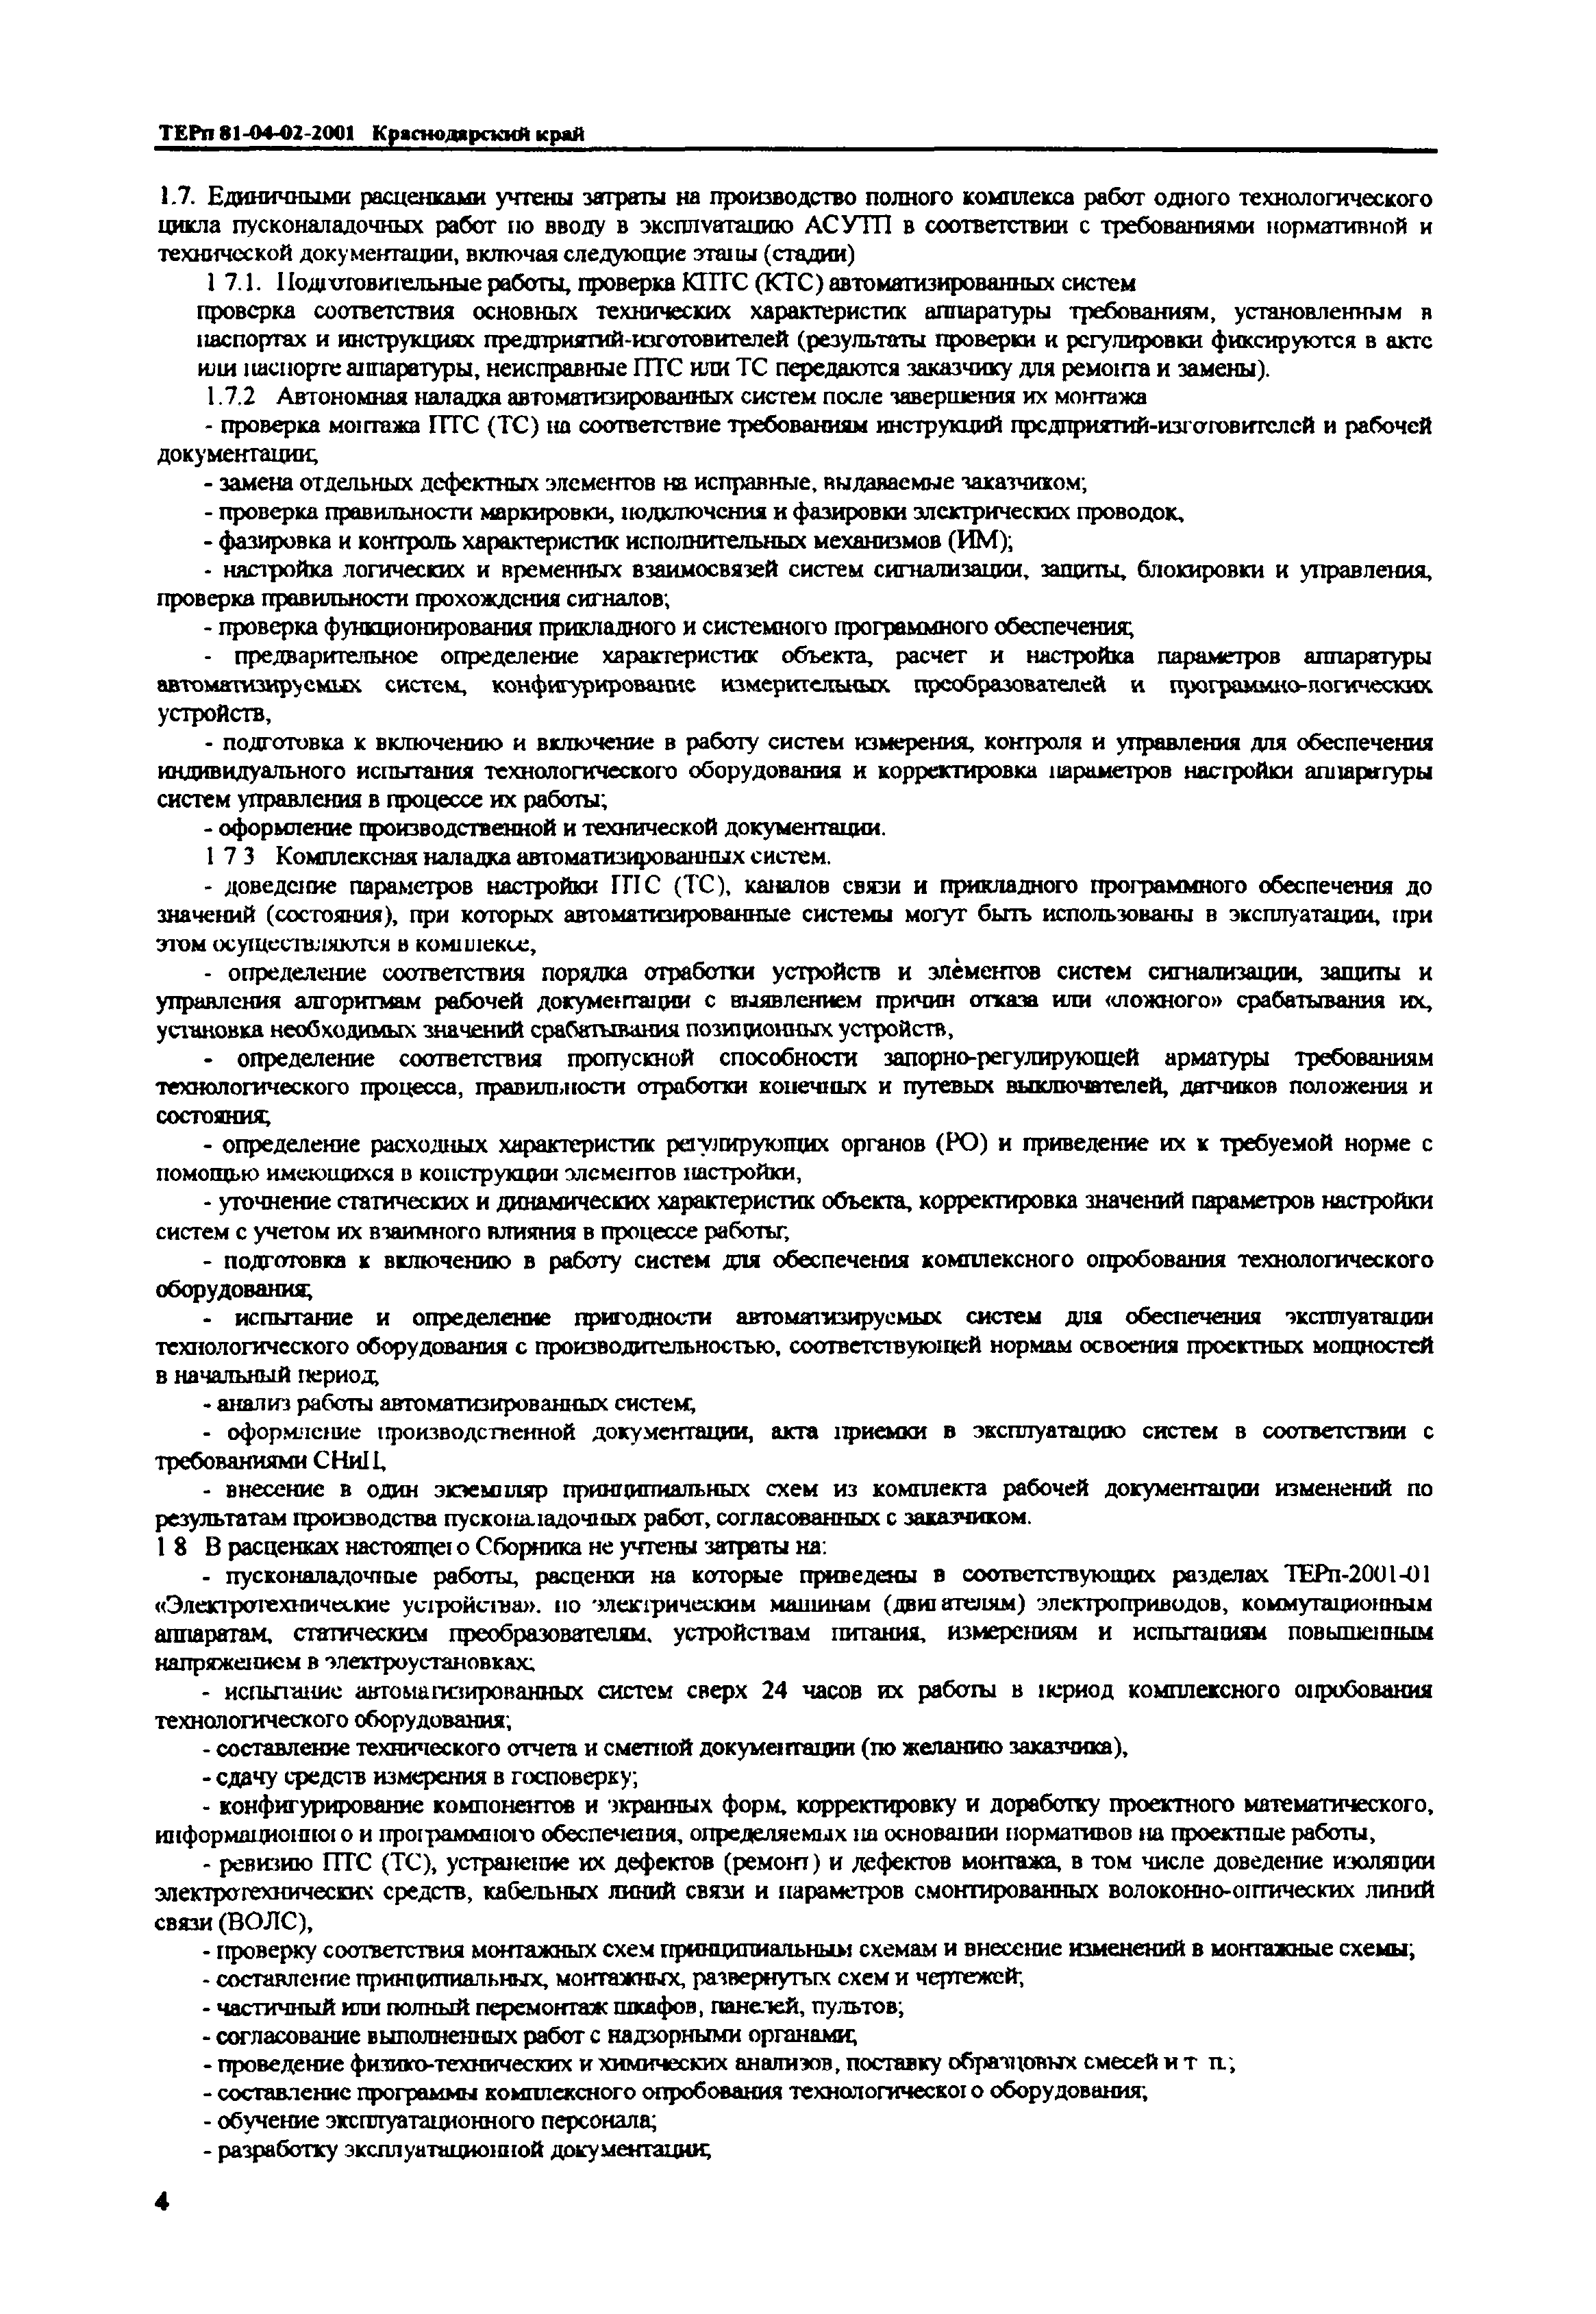 ТЕРп Краснодарский край 2001-02